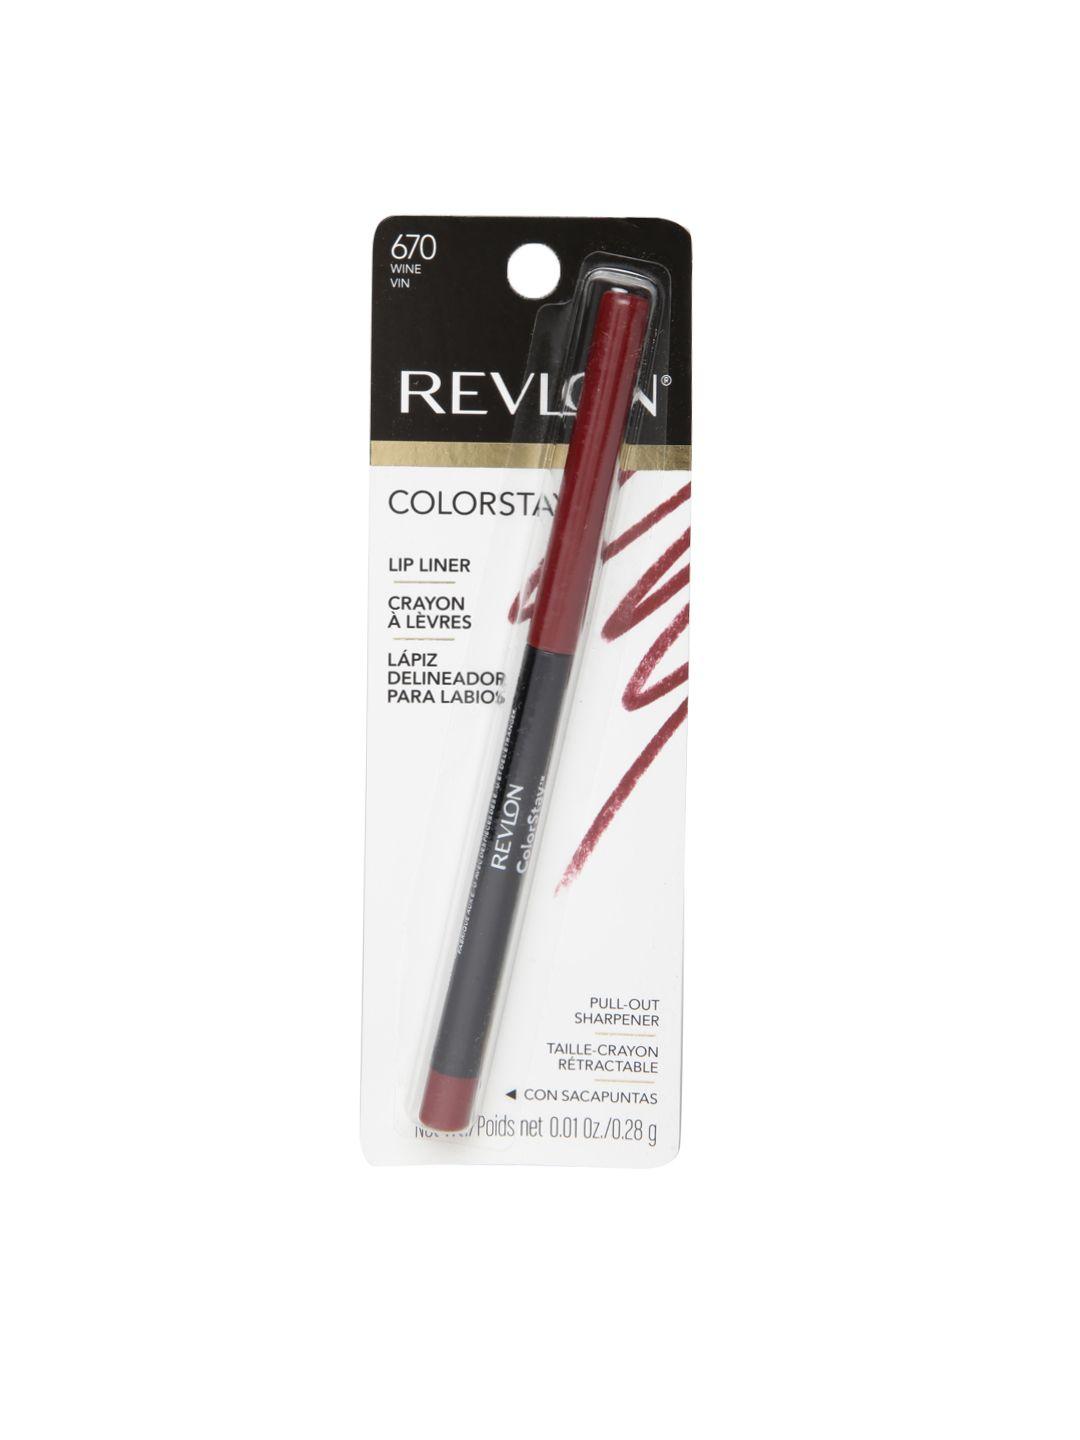 revlon colorstay wine lip liner 670